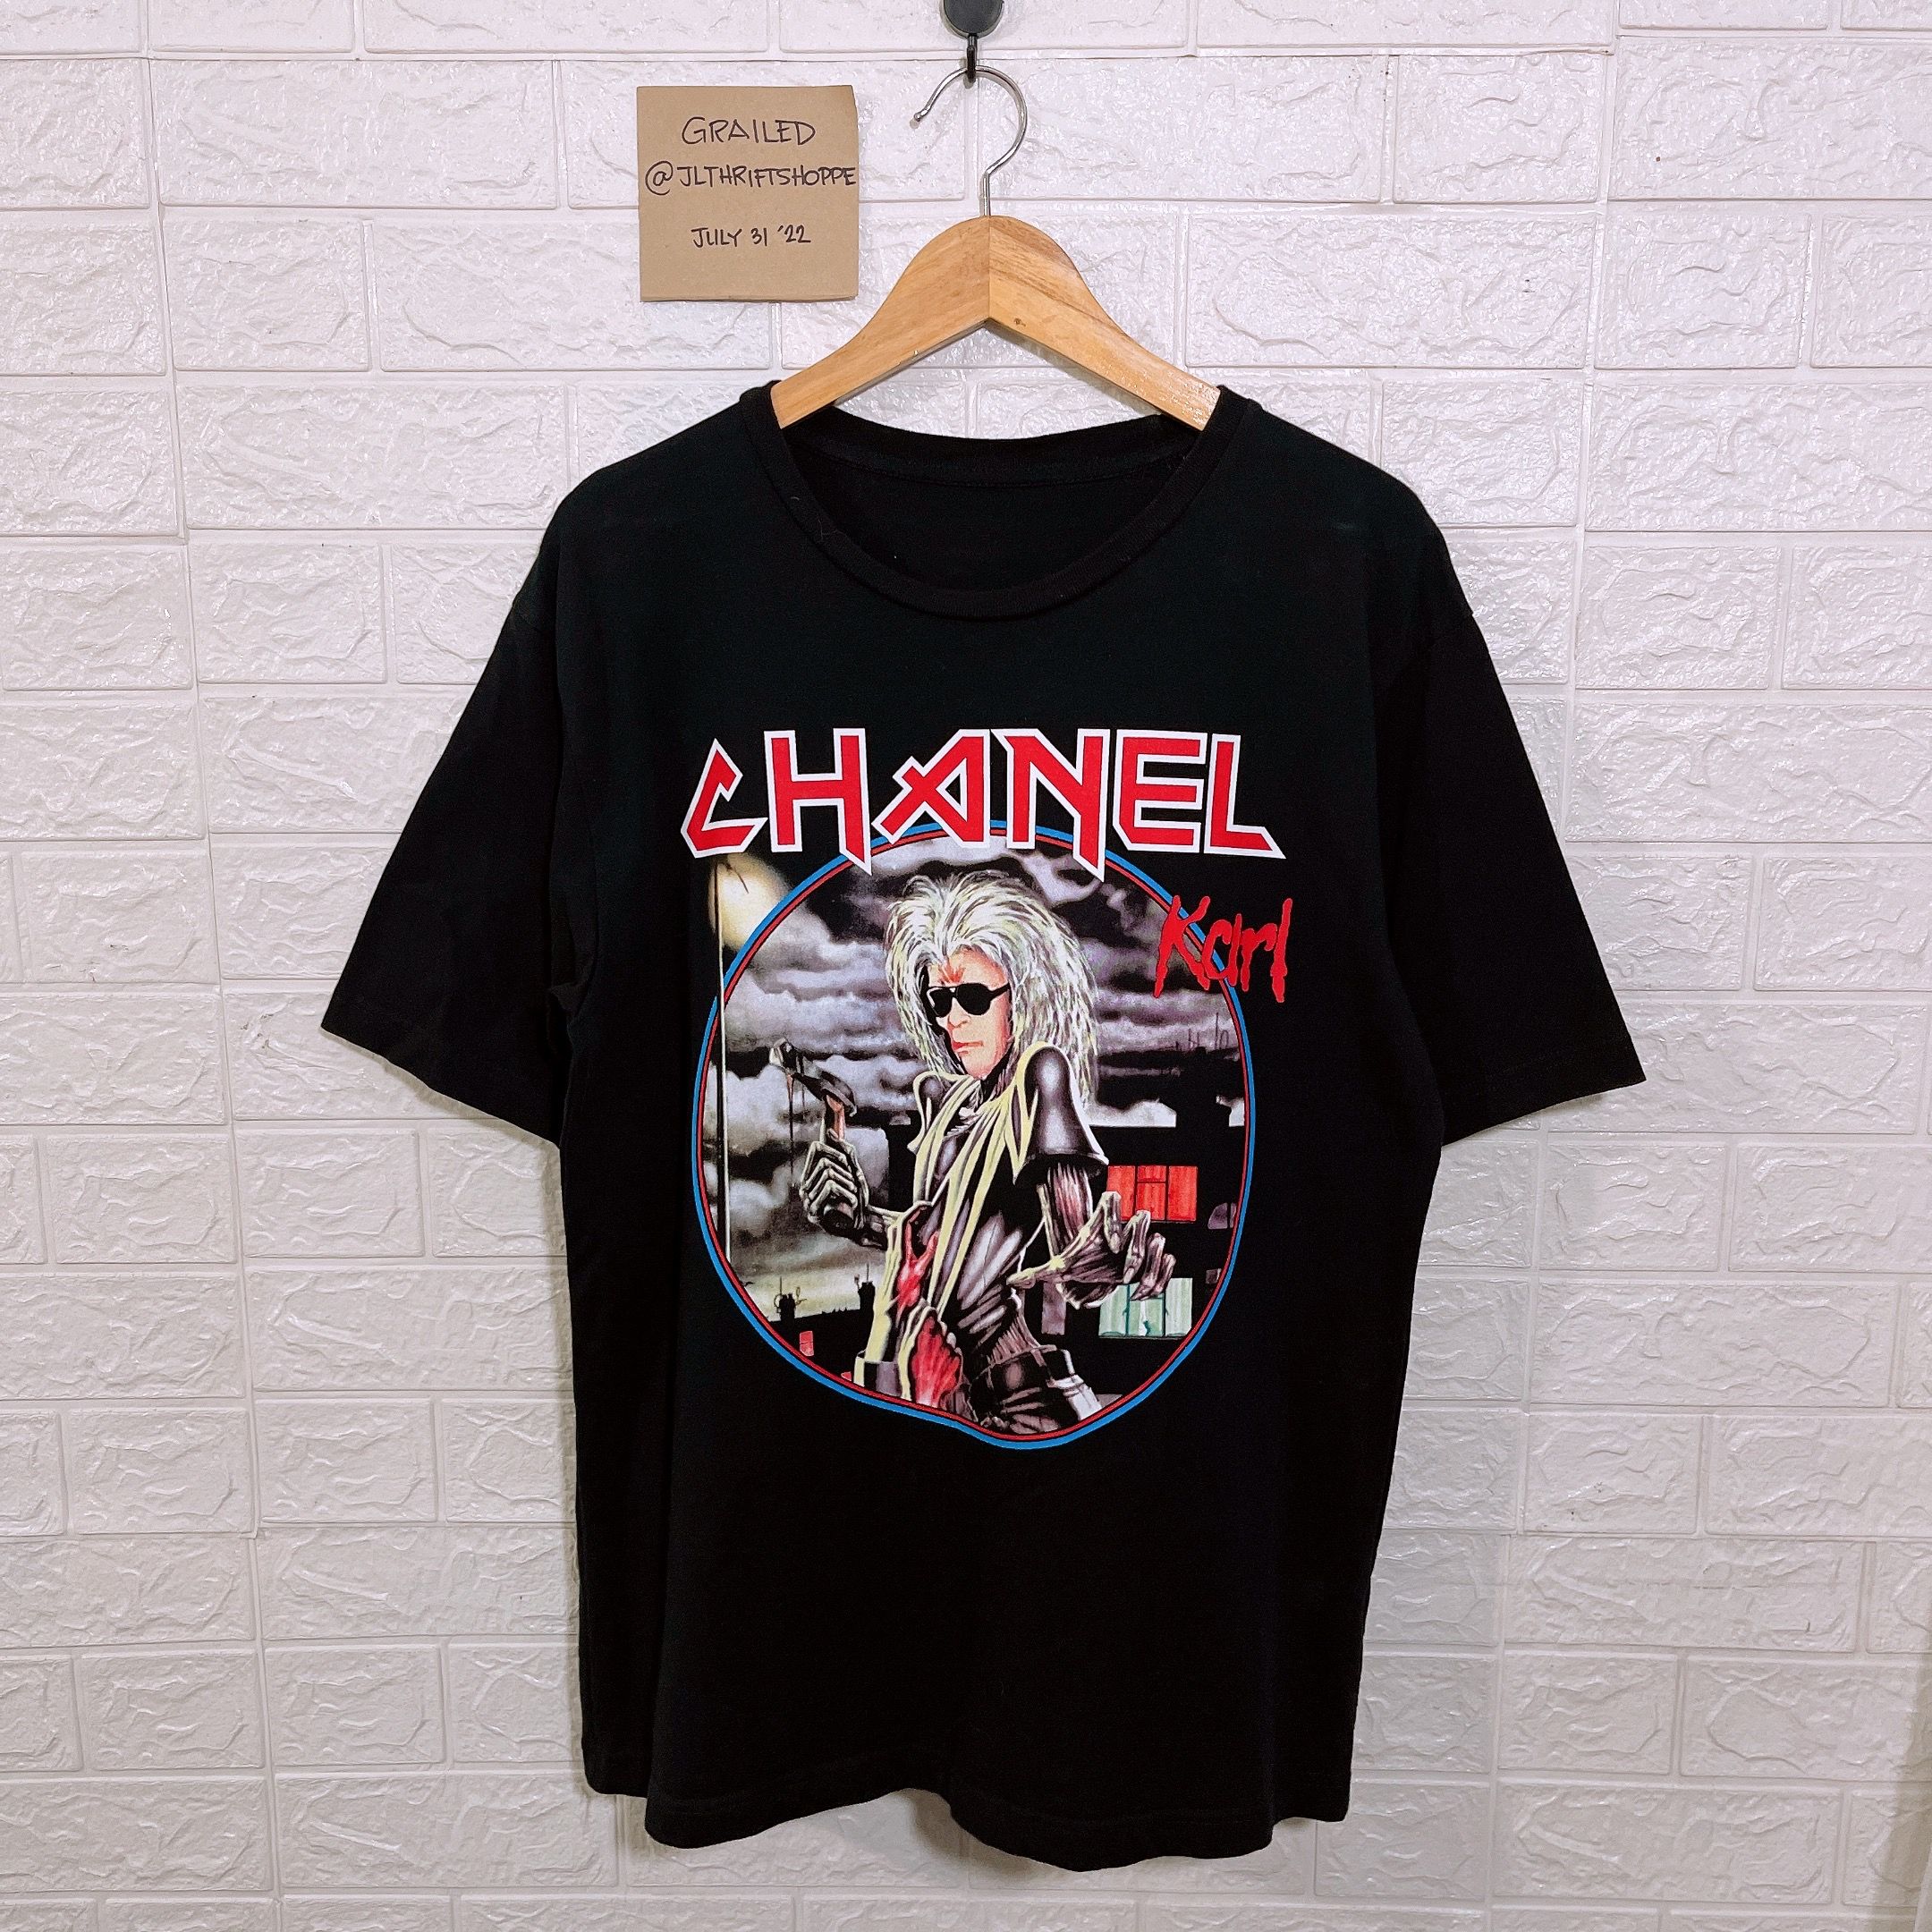 Vintage Chronies Chanel x Karl Lagerfeld x Iron Maiden Band Shirt